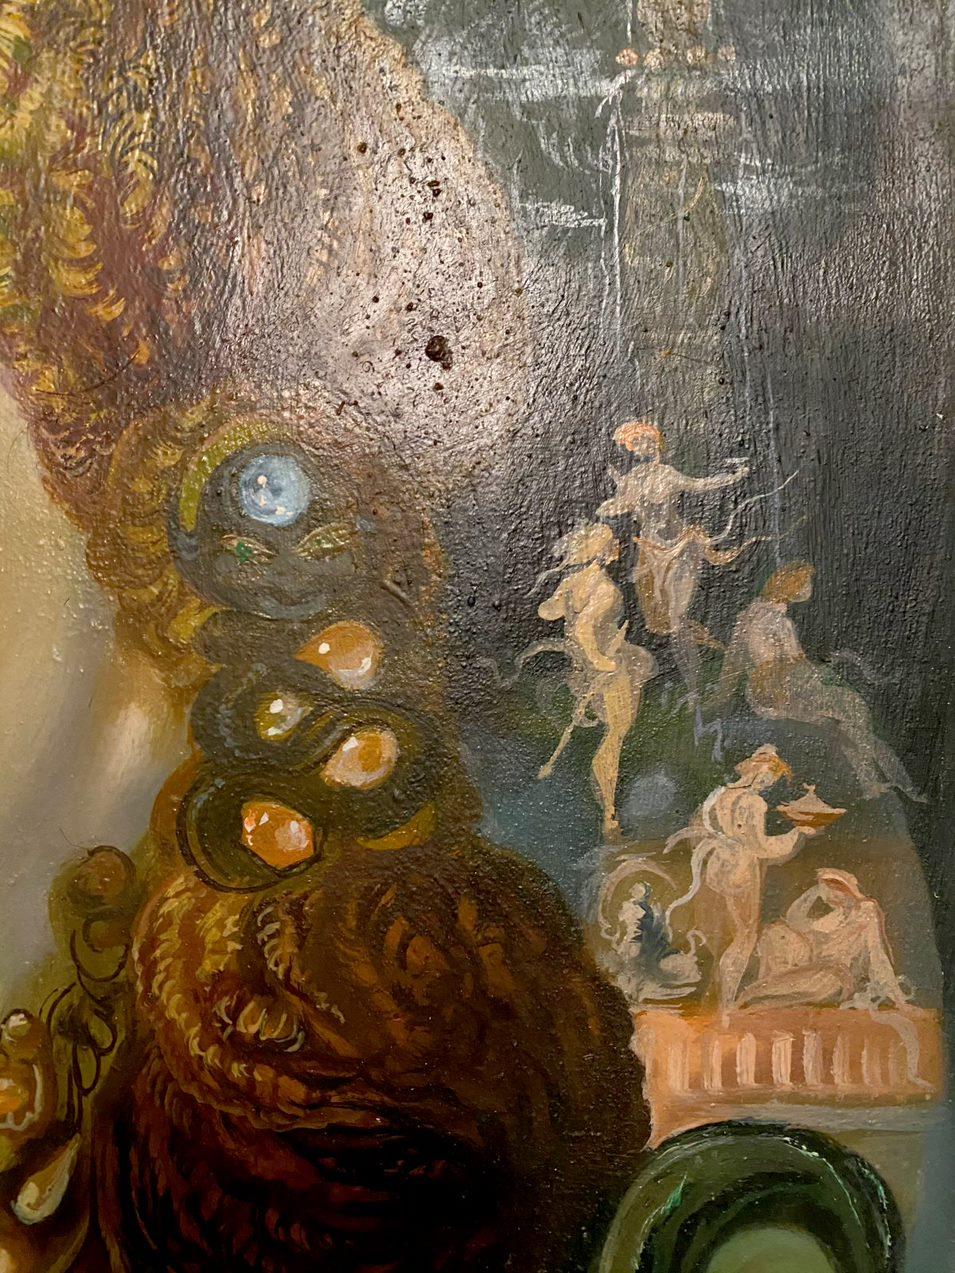 Artist: Alexander Litvinov
Work: Original oil painting, handmade artwork, one of a kind 
Medium: Oil on Canvas
Style: Classic Figurative
Year: 2001
Title: Based on Wagner's Operas
Size: 20